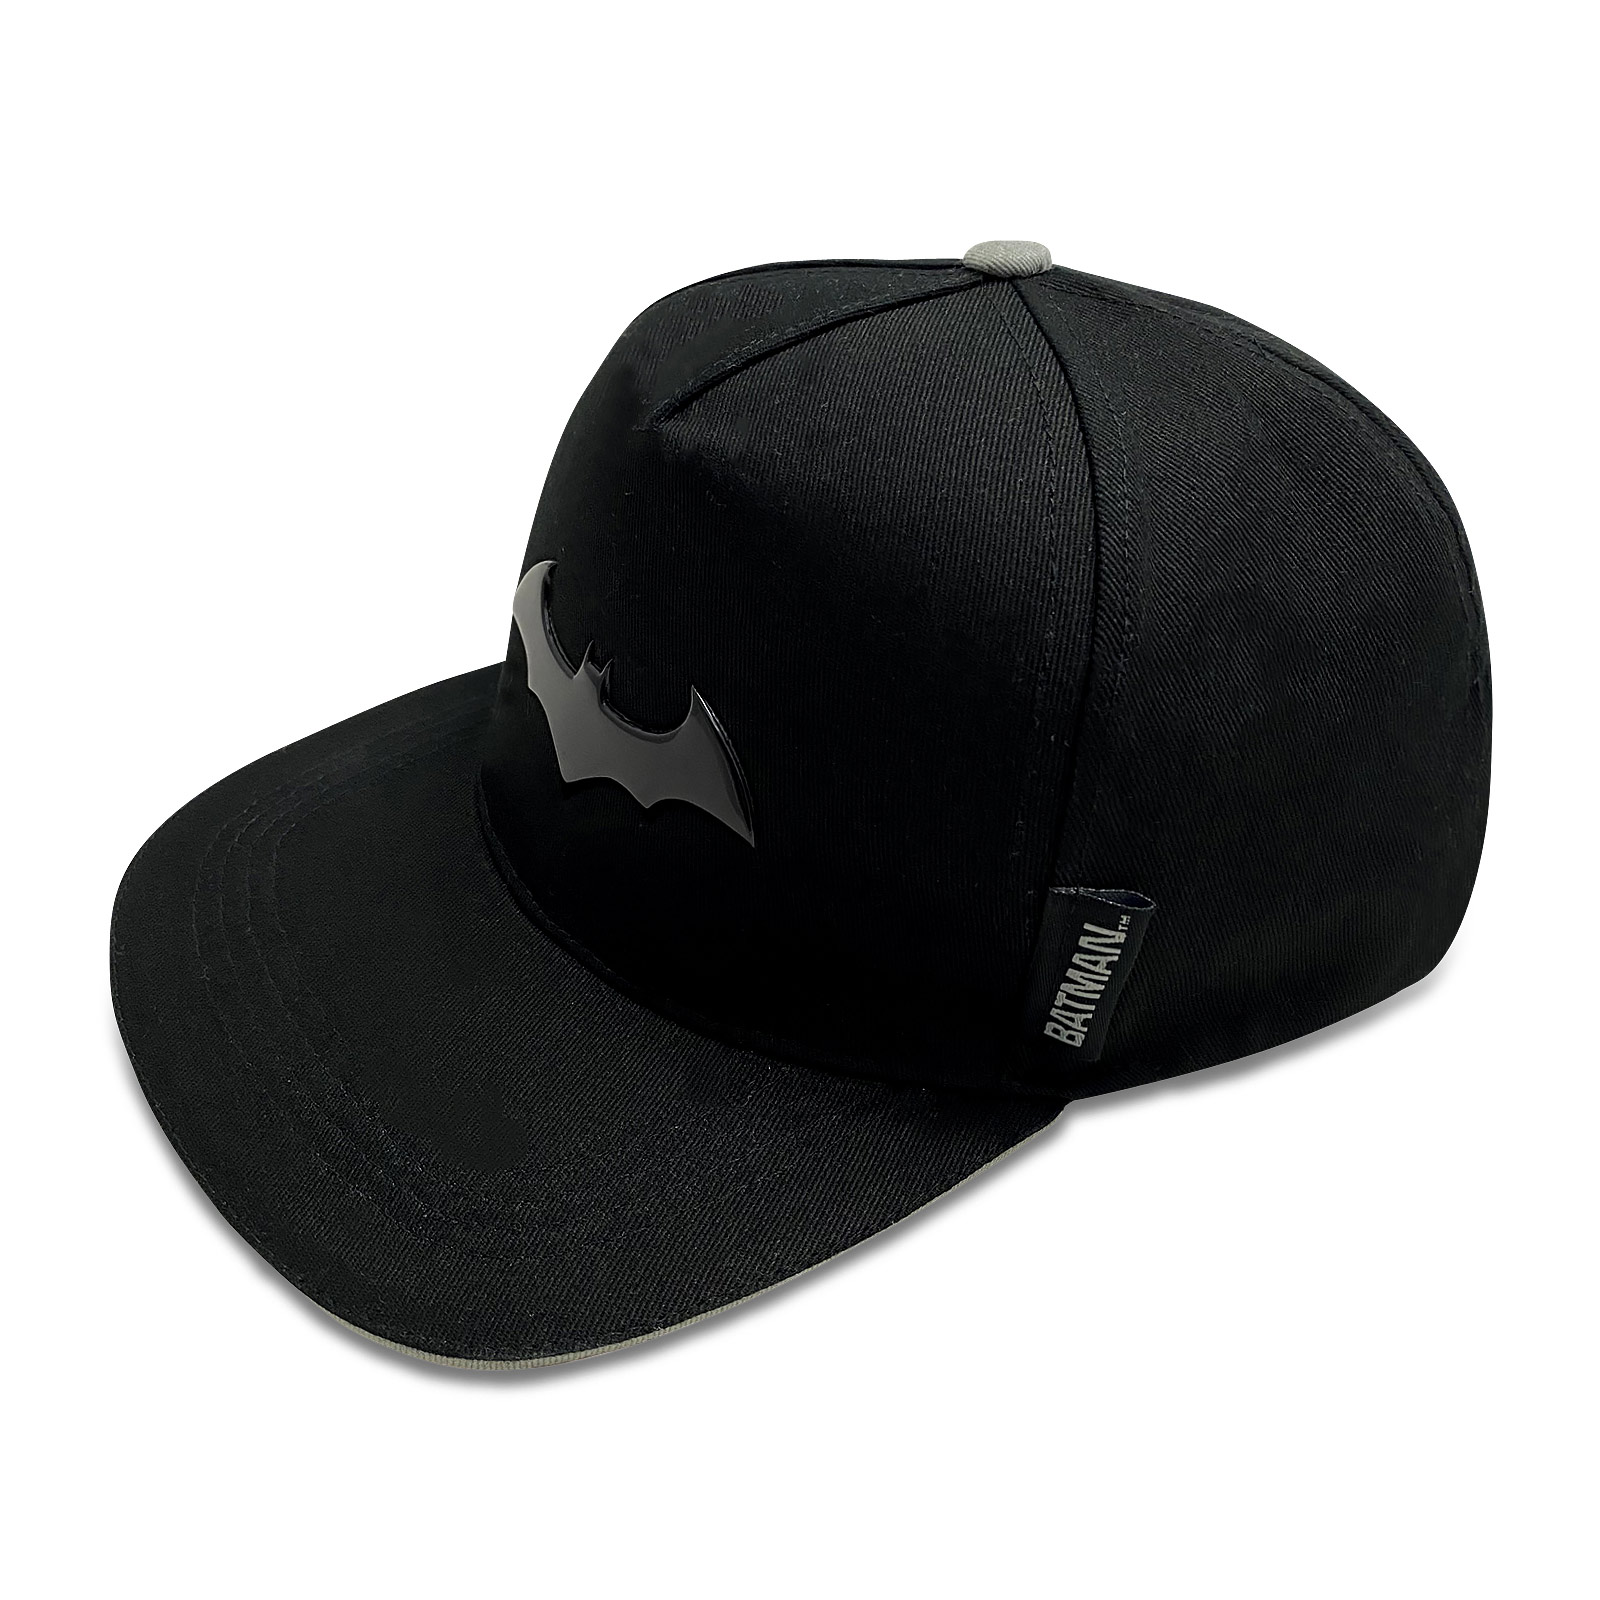 Batman - Vinyl Logo Snapback Cap Black